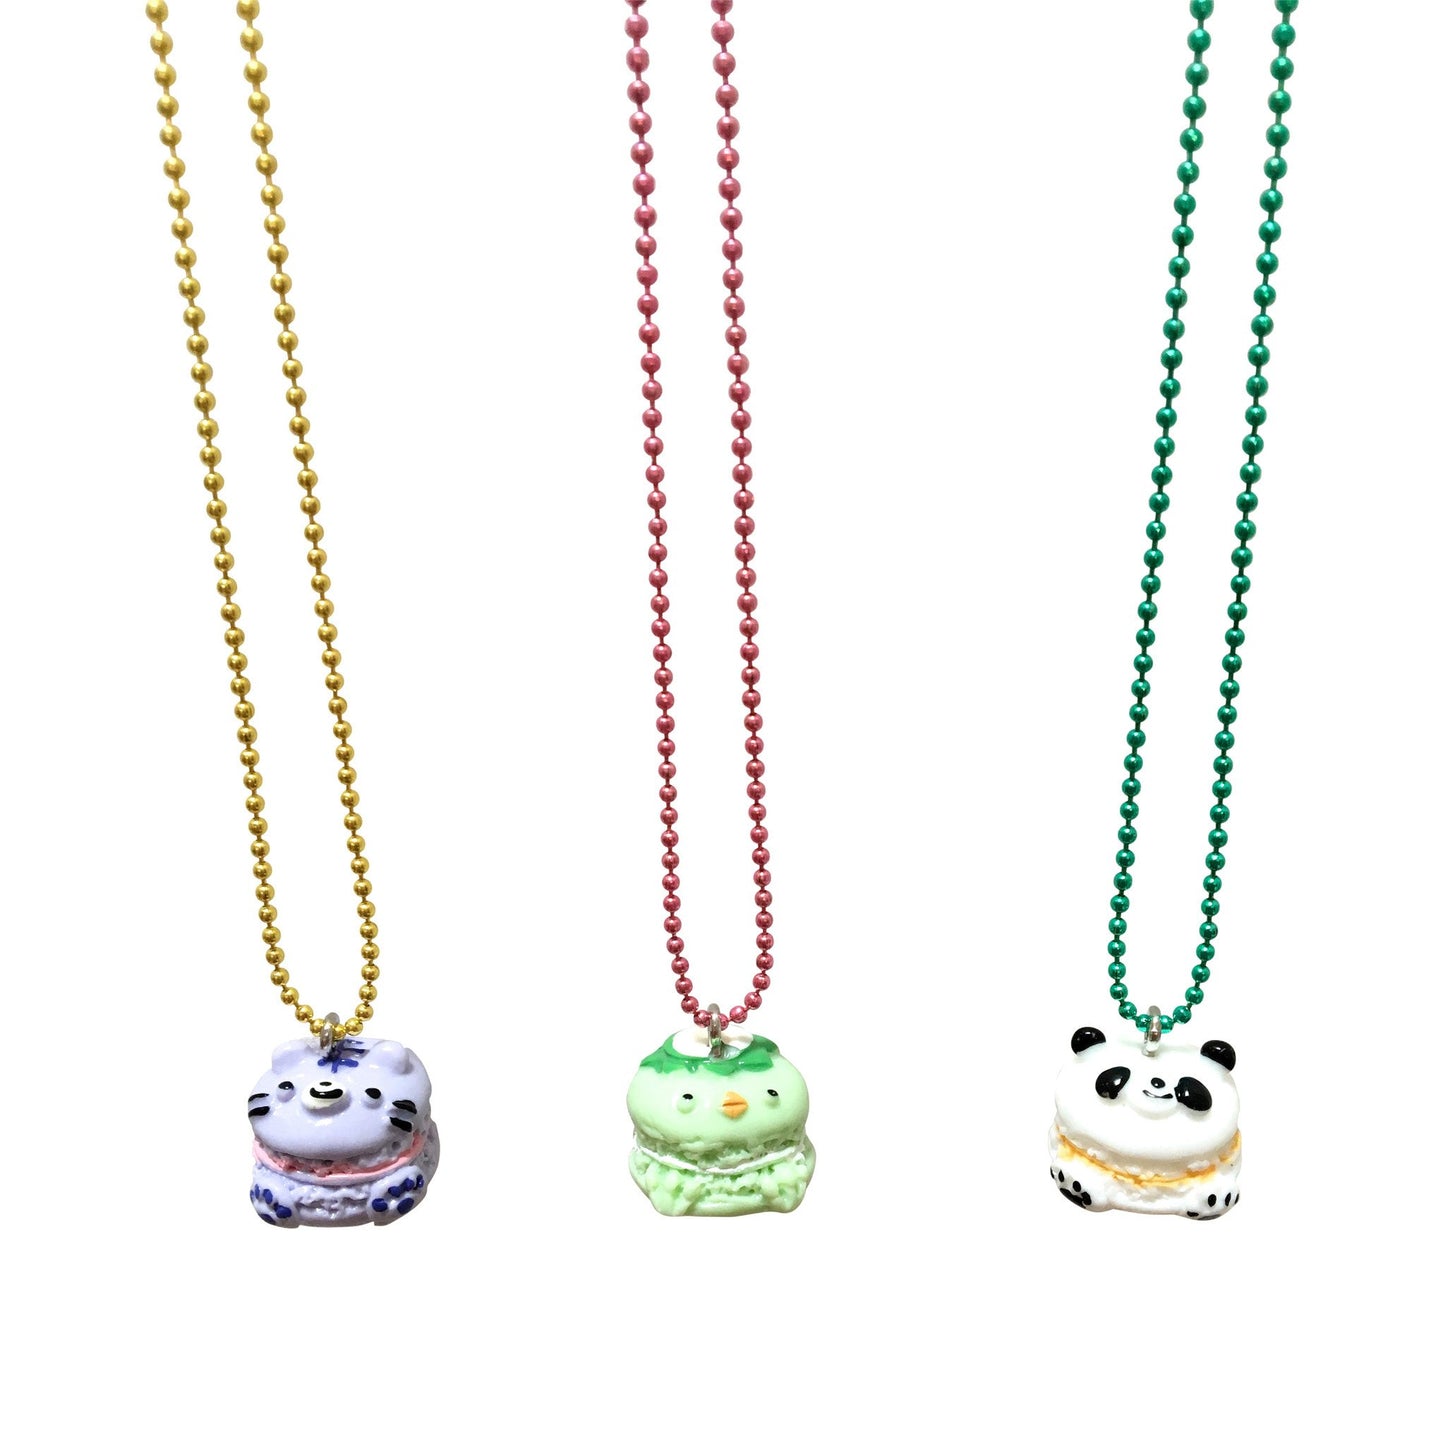 Sale! Pop Cutie Gacha Macaroon Animal Necklaces